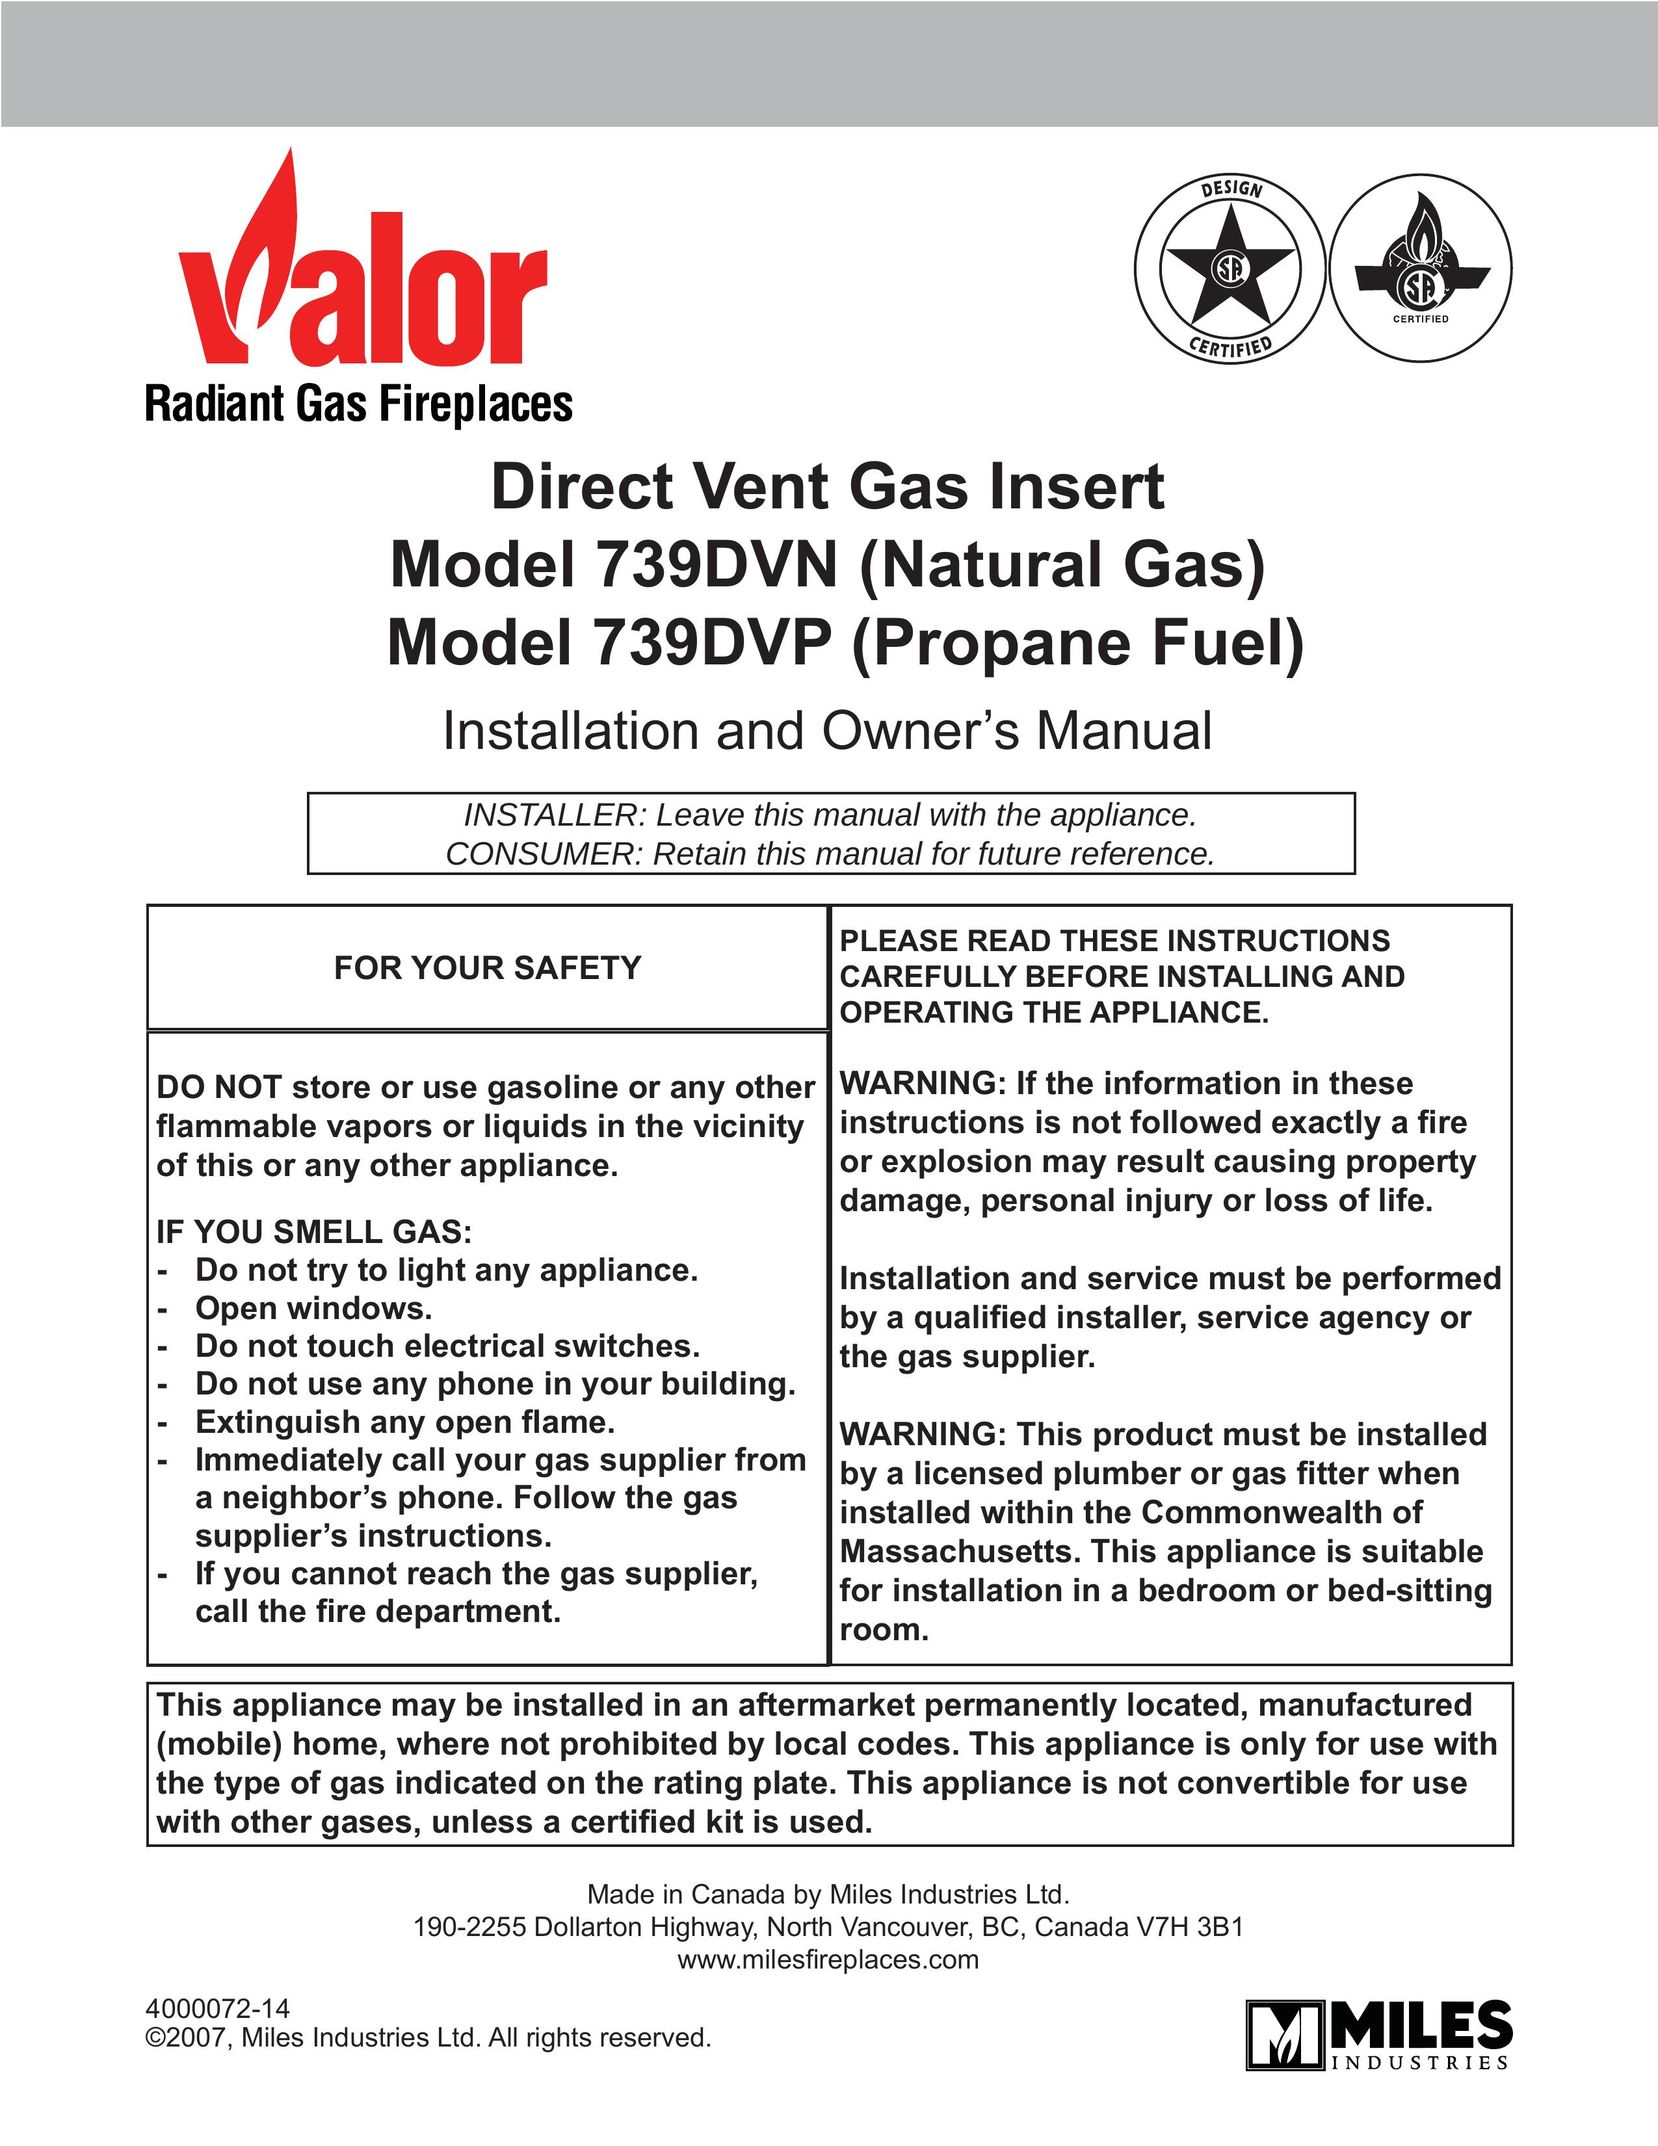 Valor Auto Companion Inc. 739DVP Indoor Fireplace User Manual